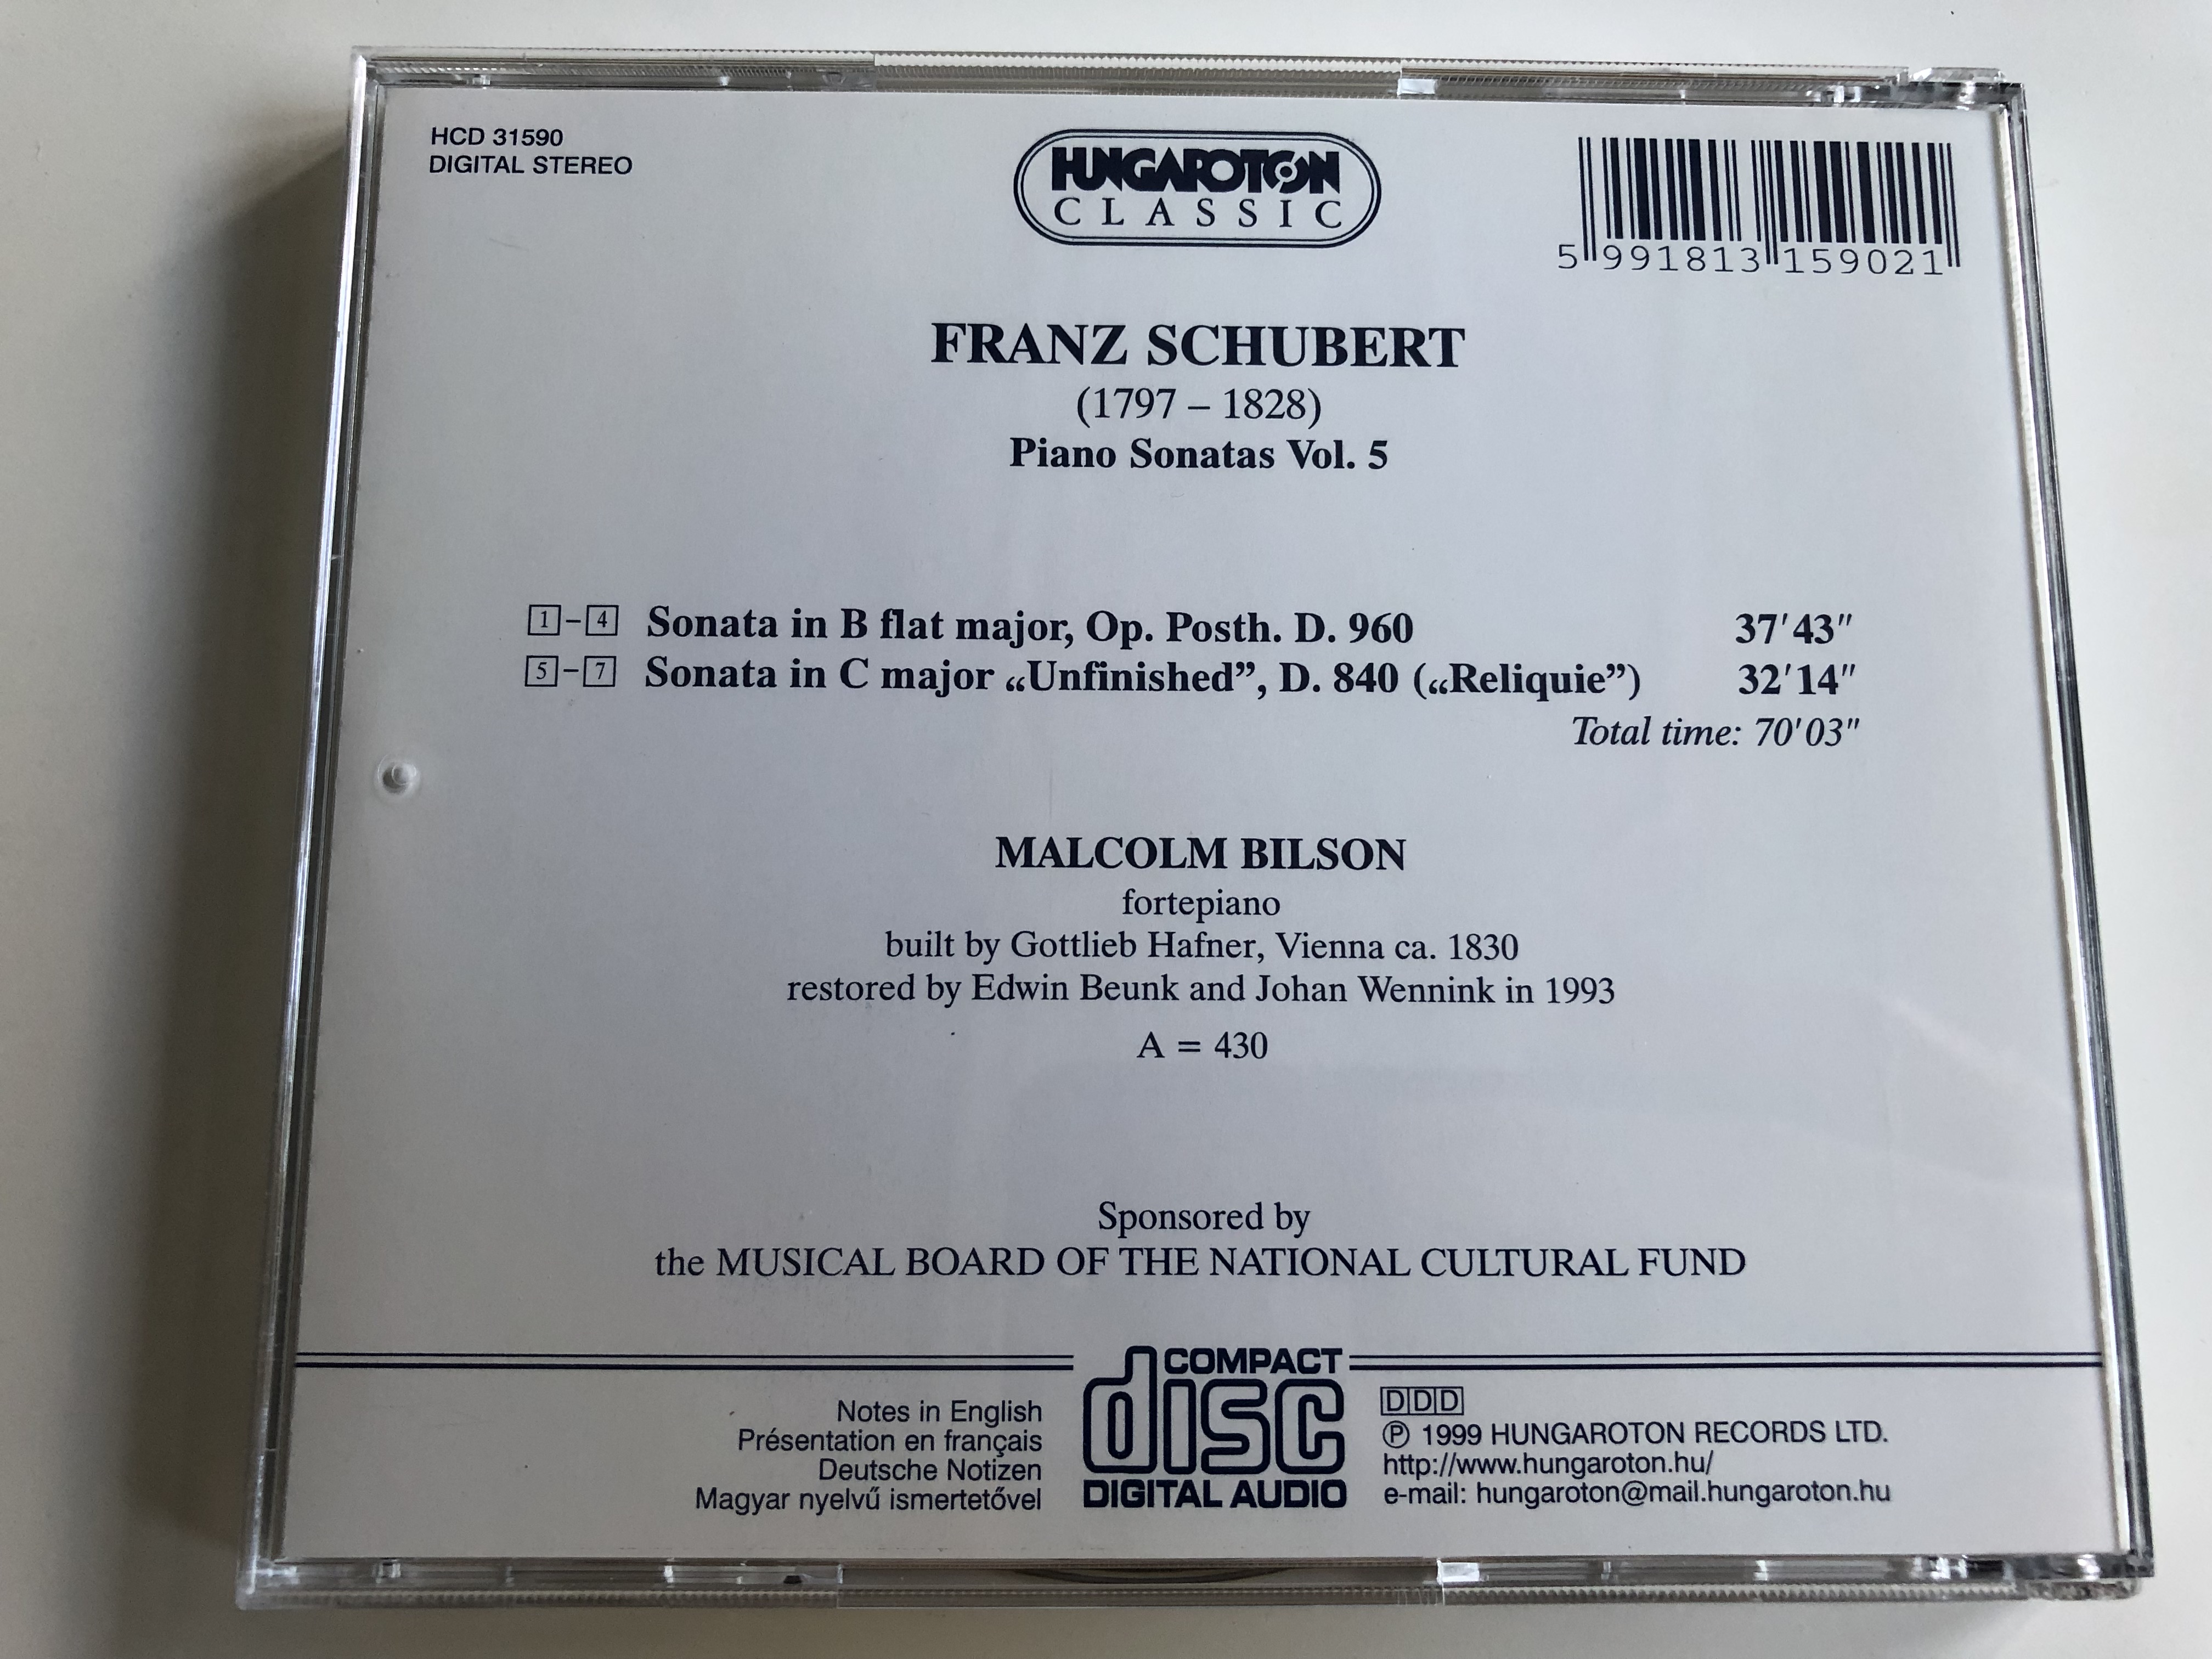 schubert-piano-sonatas-in-b-flat-major-d.960-in-c-major-d.-840-unfinshed-malcolm-bilson-fortepiano-hungaroton-classic-hcd-31590-audio-cd-1999-7-.jpg